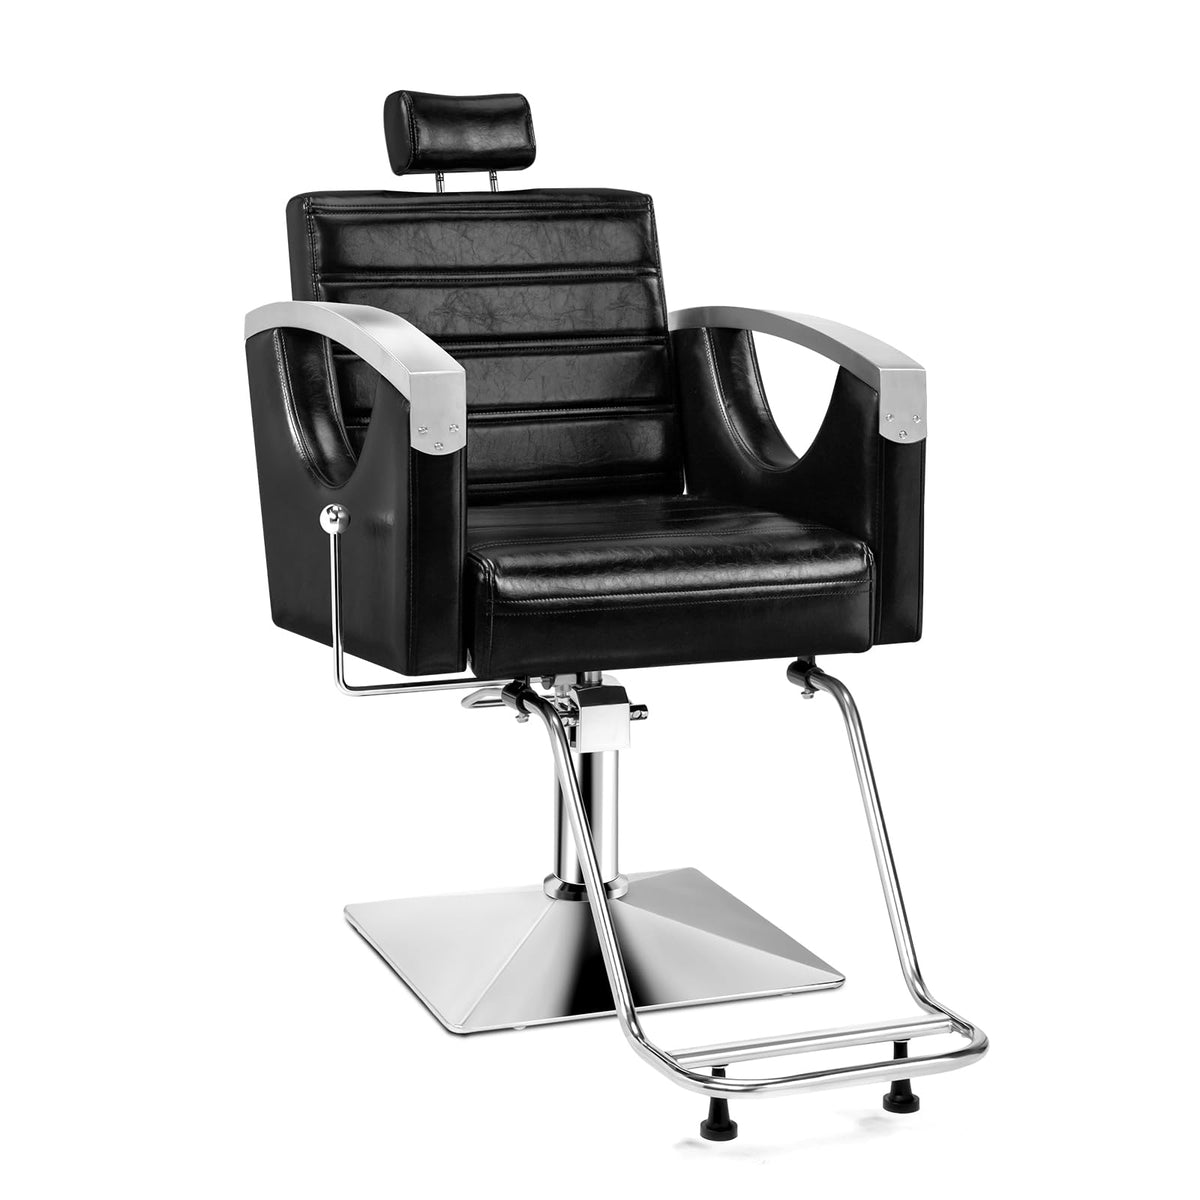 OmySalon SC2611 All Purpose Heavy Duty Hydraulic Reclining Hair Salon Chair w/Headrest and Stainless Steel Armrest